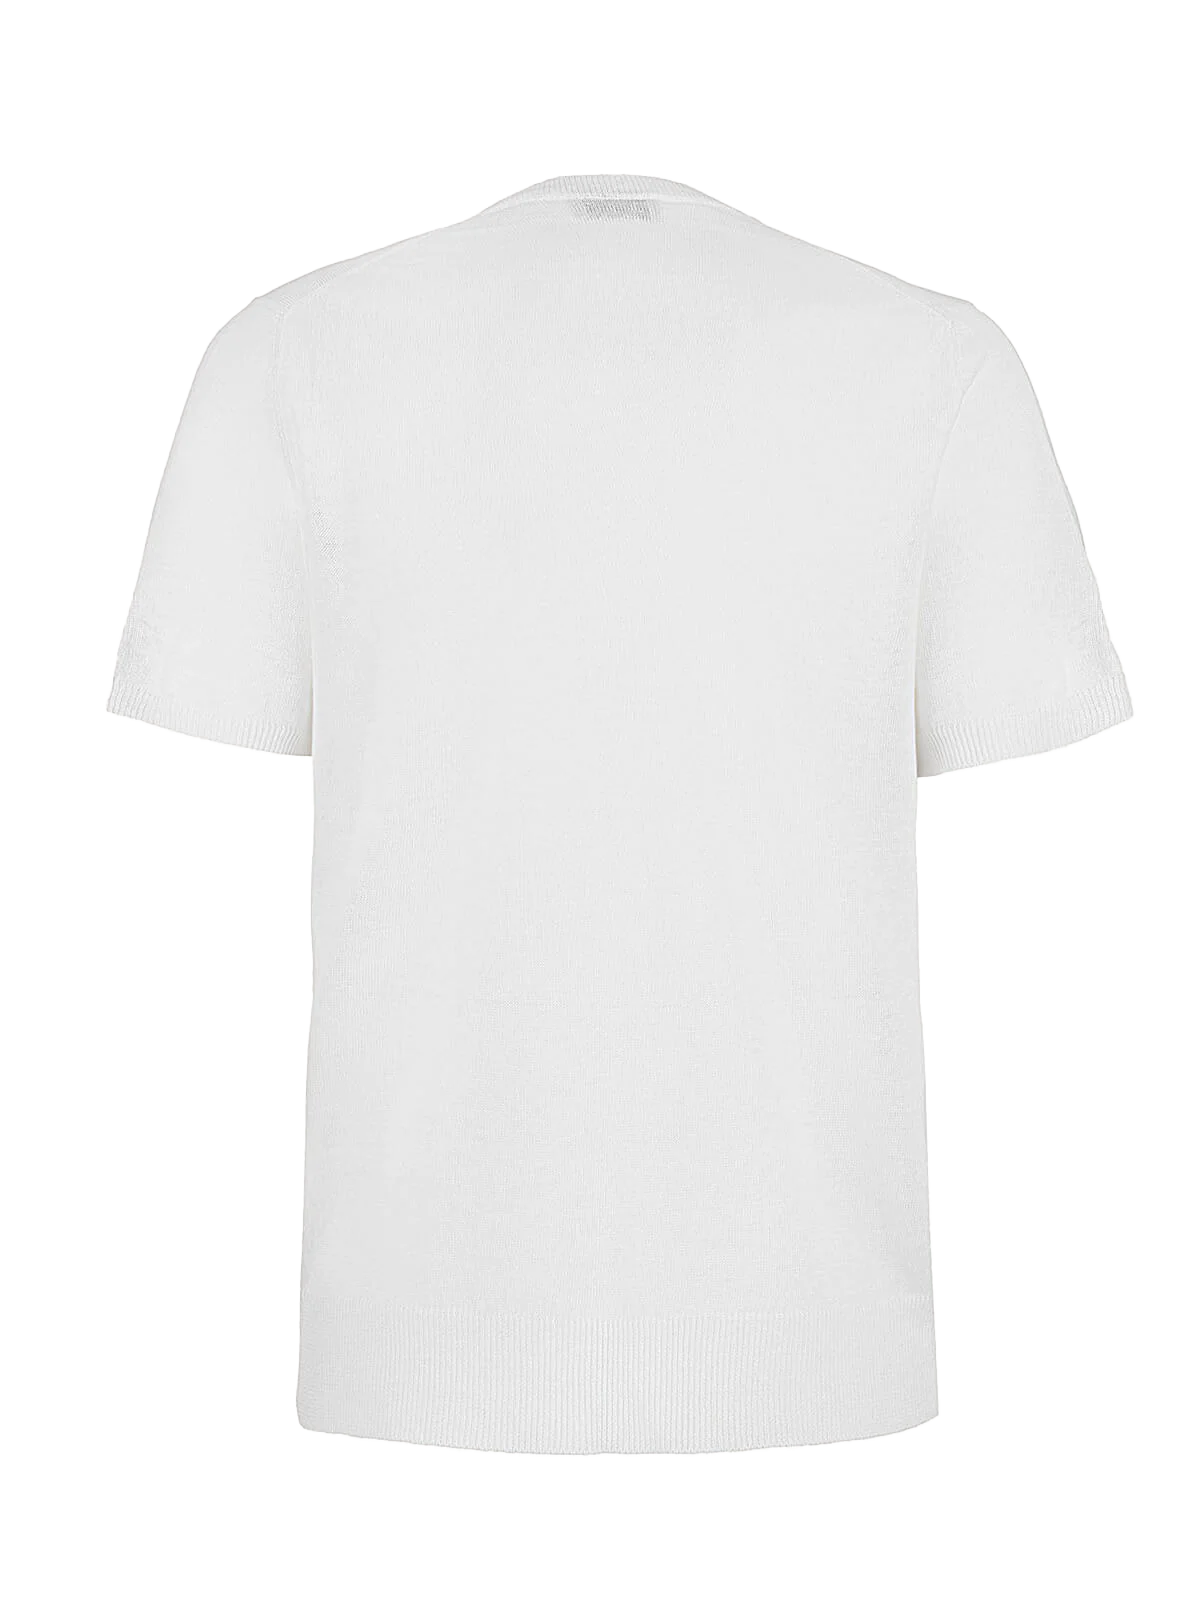 T-Shirt M/C 100% Capri white linen t-shirt back